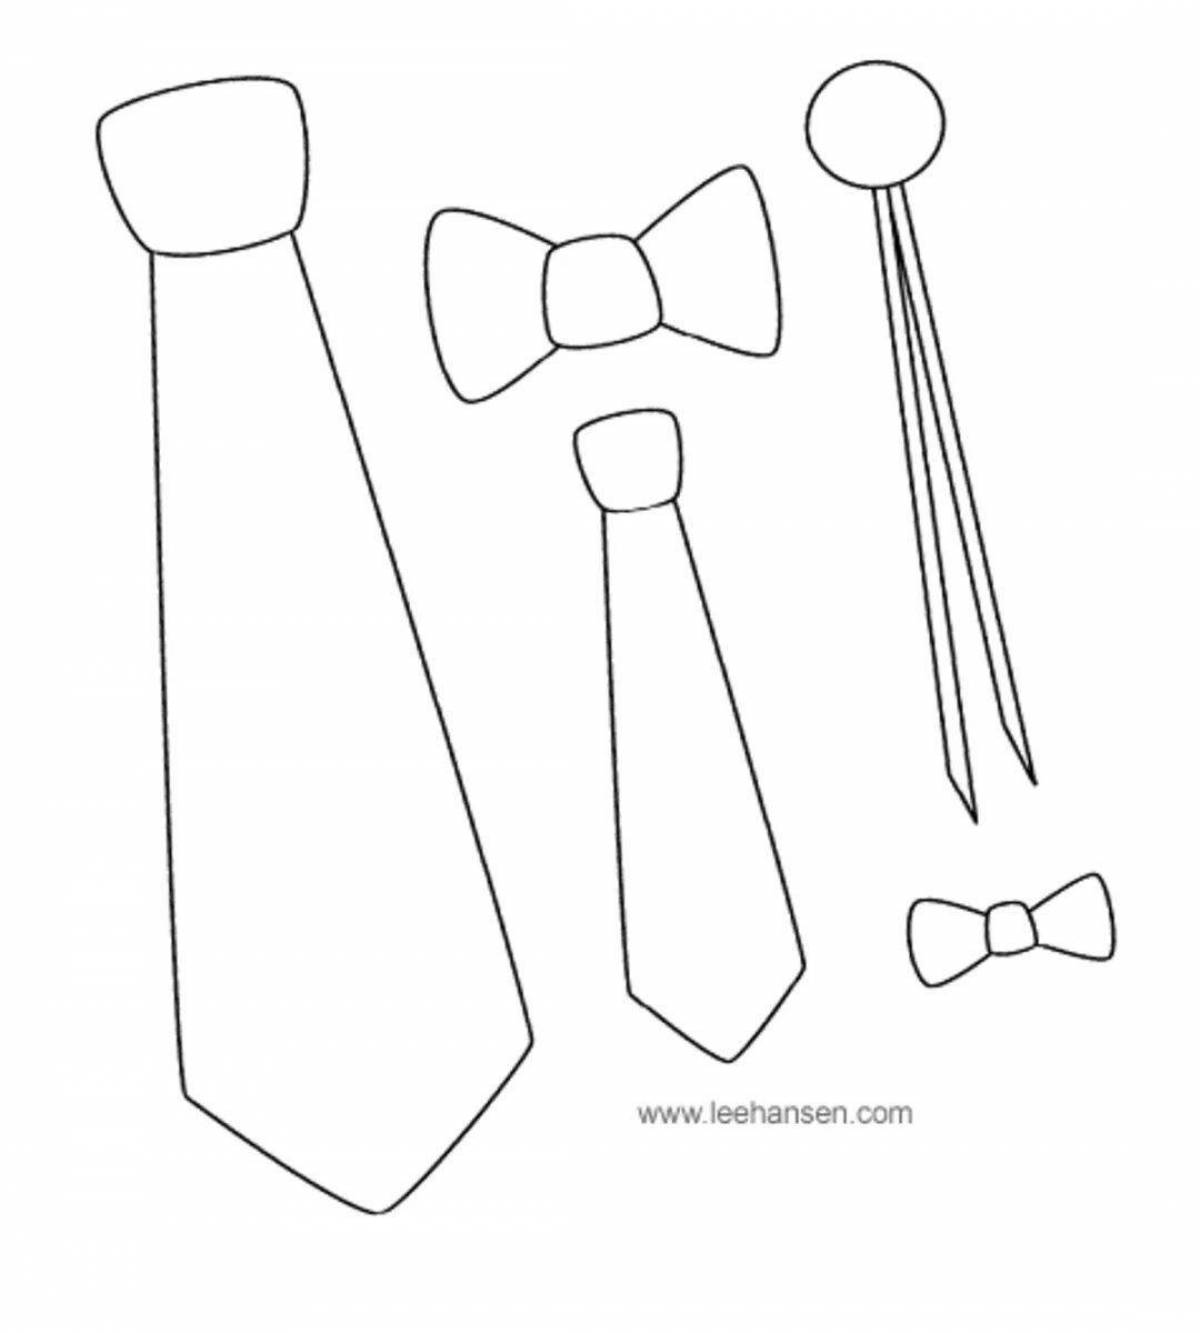 Сказочная страница раскраски галстука для папы